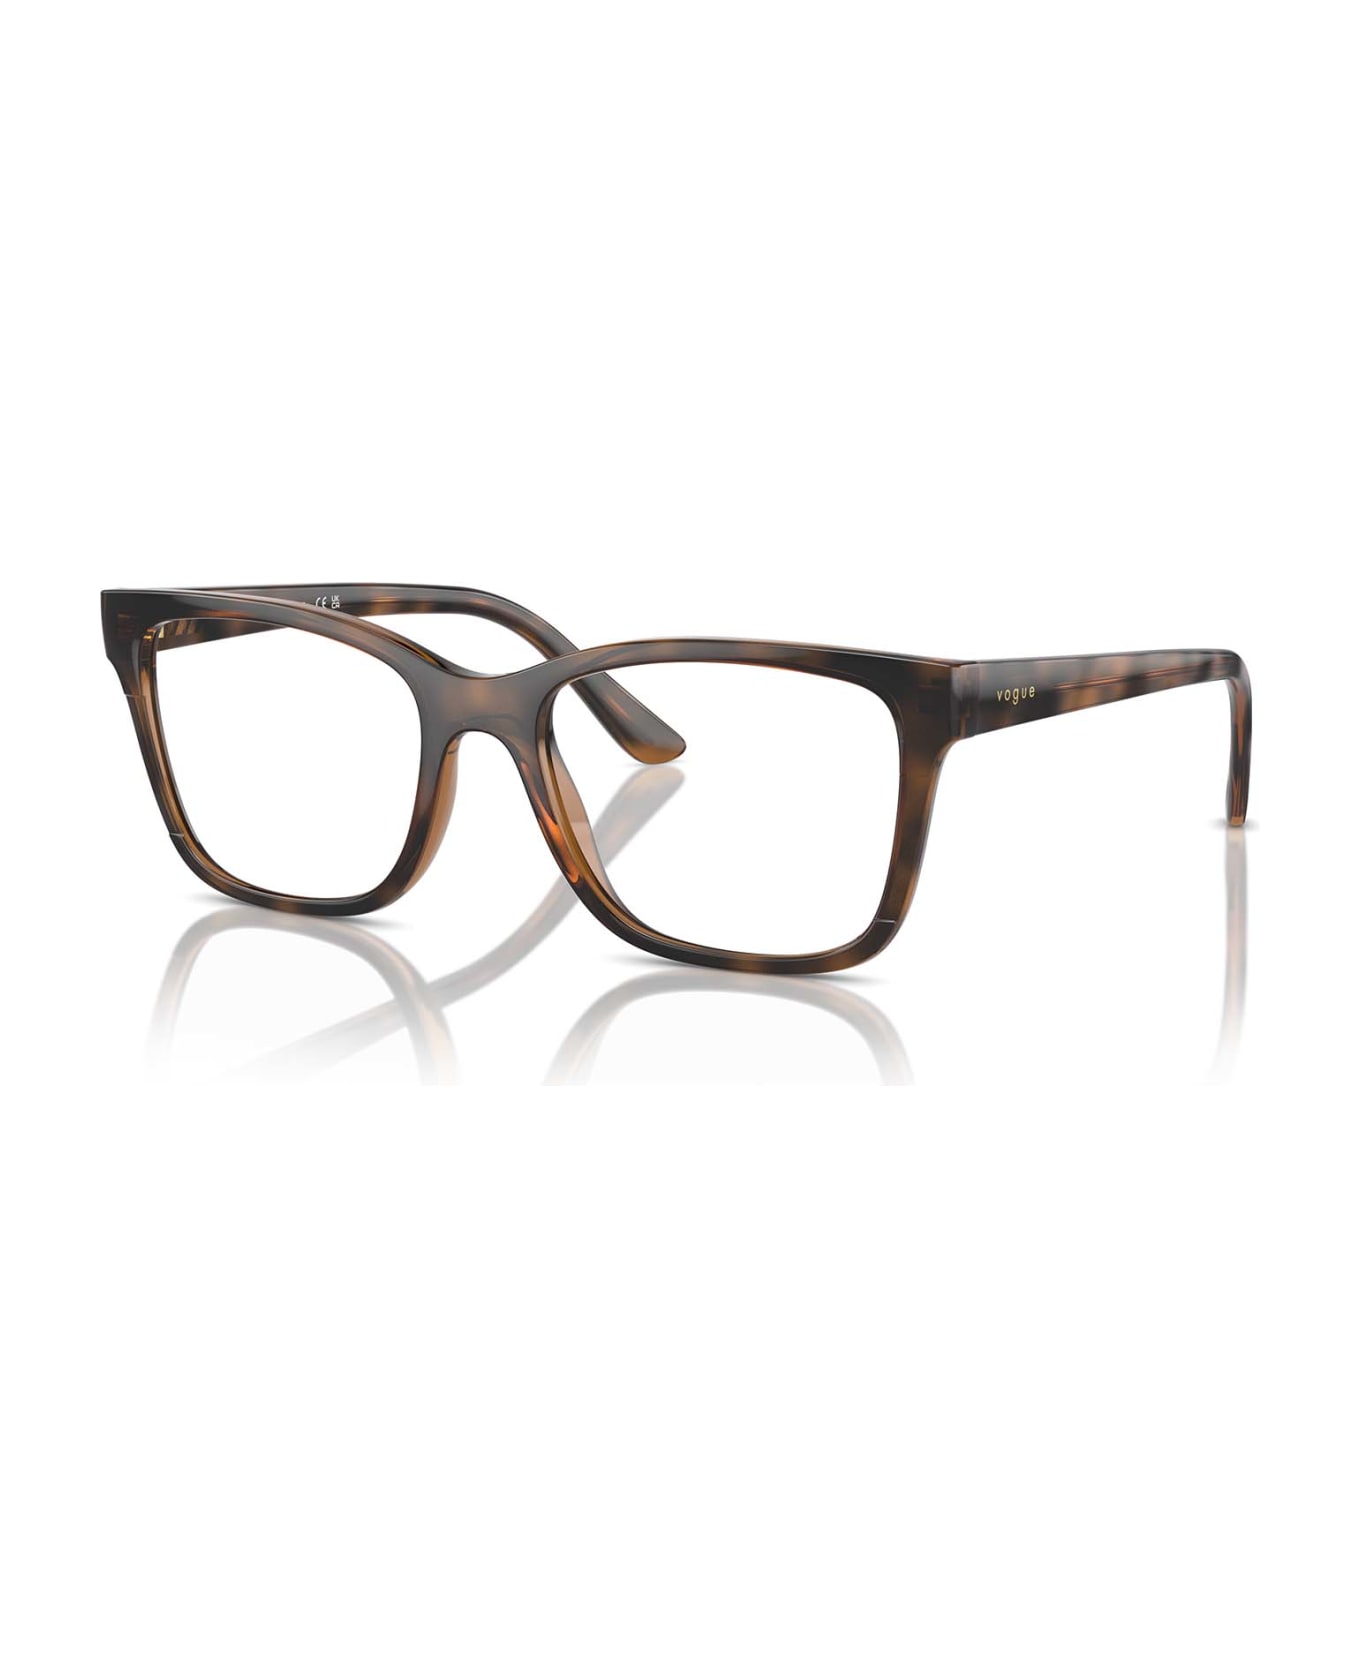 Vogue Eyewear Vo5556 Top Dark Havana / Light Brown Glasses - Top Dark Havana / Light Brown アイウェア